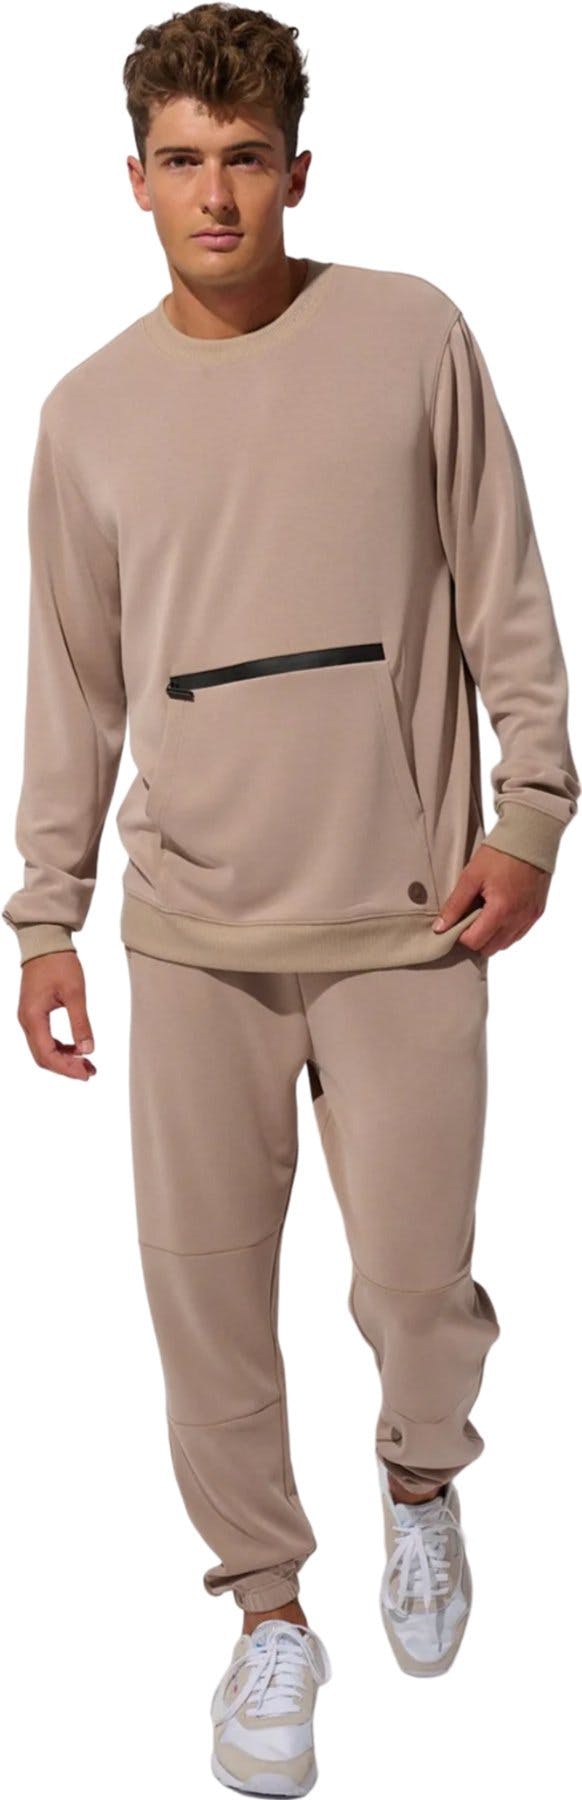 Product image for Sunday Sweatshirt - Men's